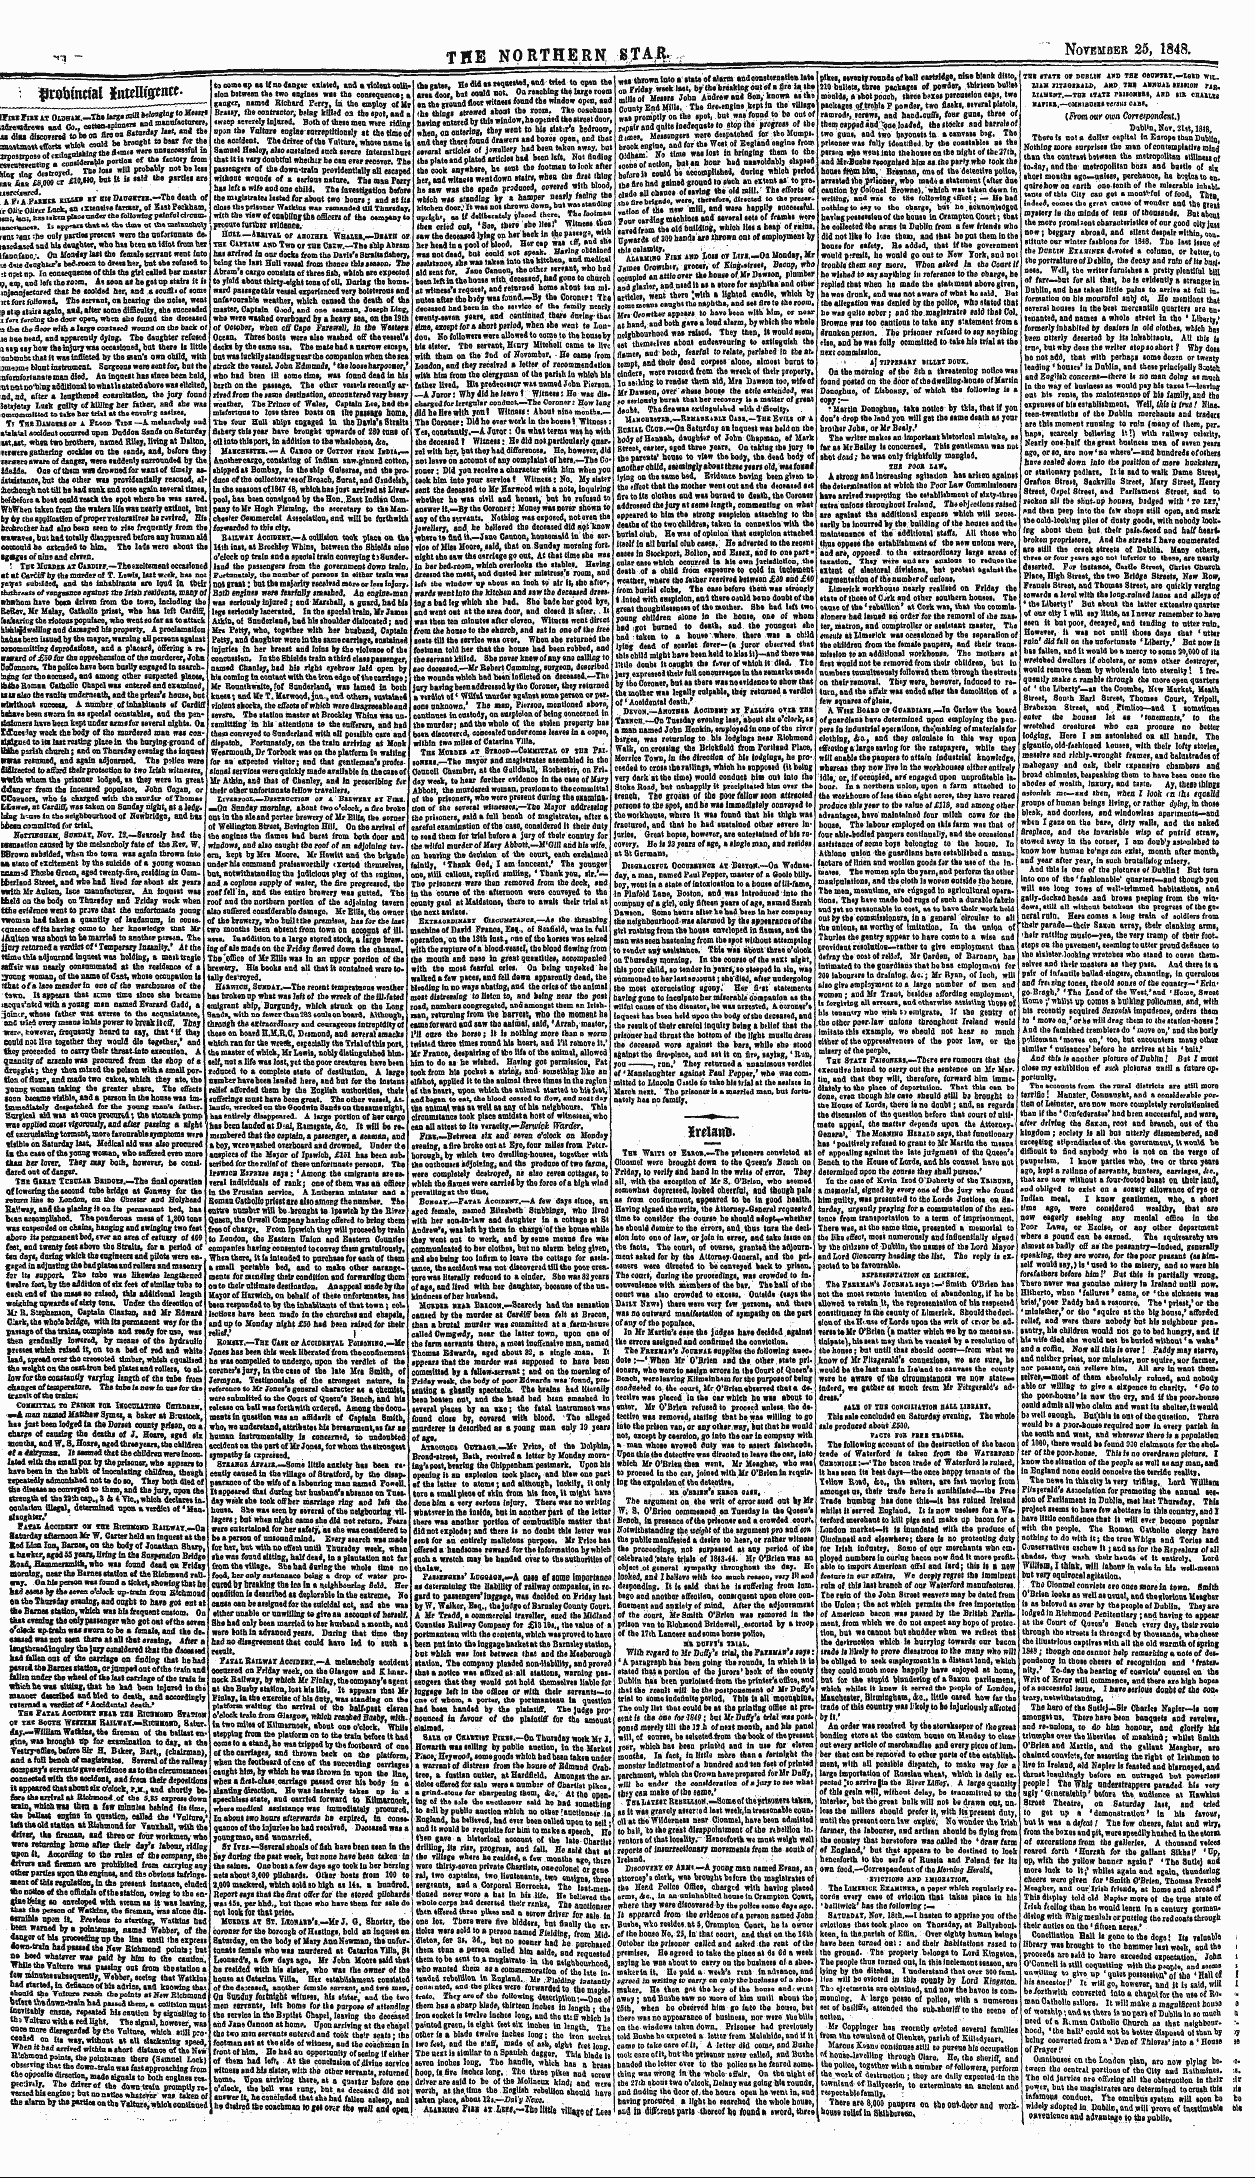 Northern Star (1837-1852): jS F Y, 3rd edition - Ireli-Mfc